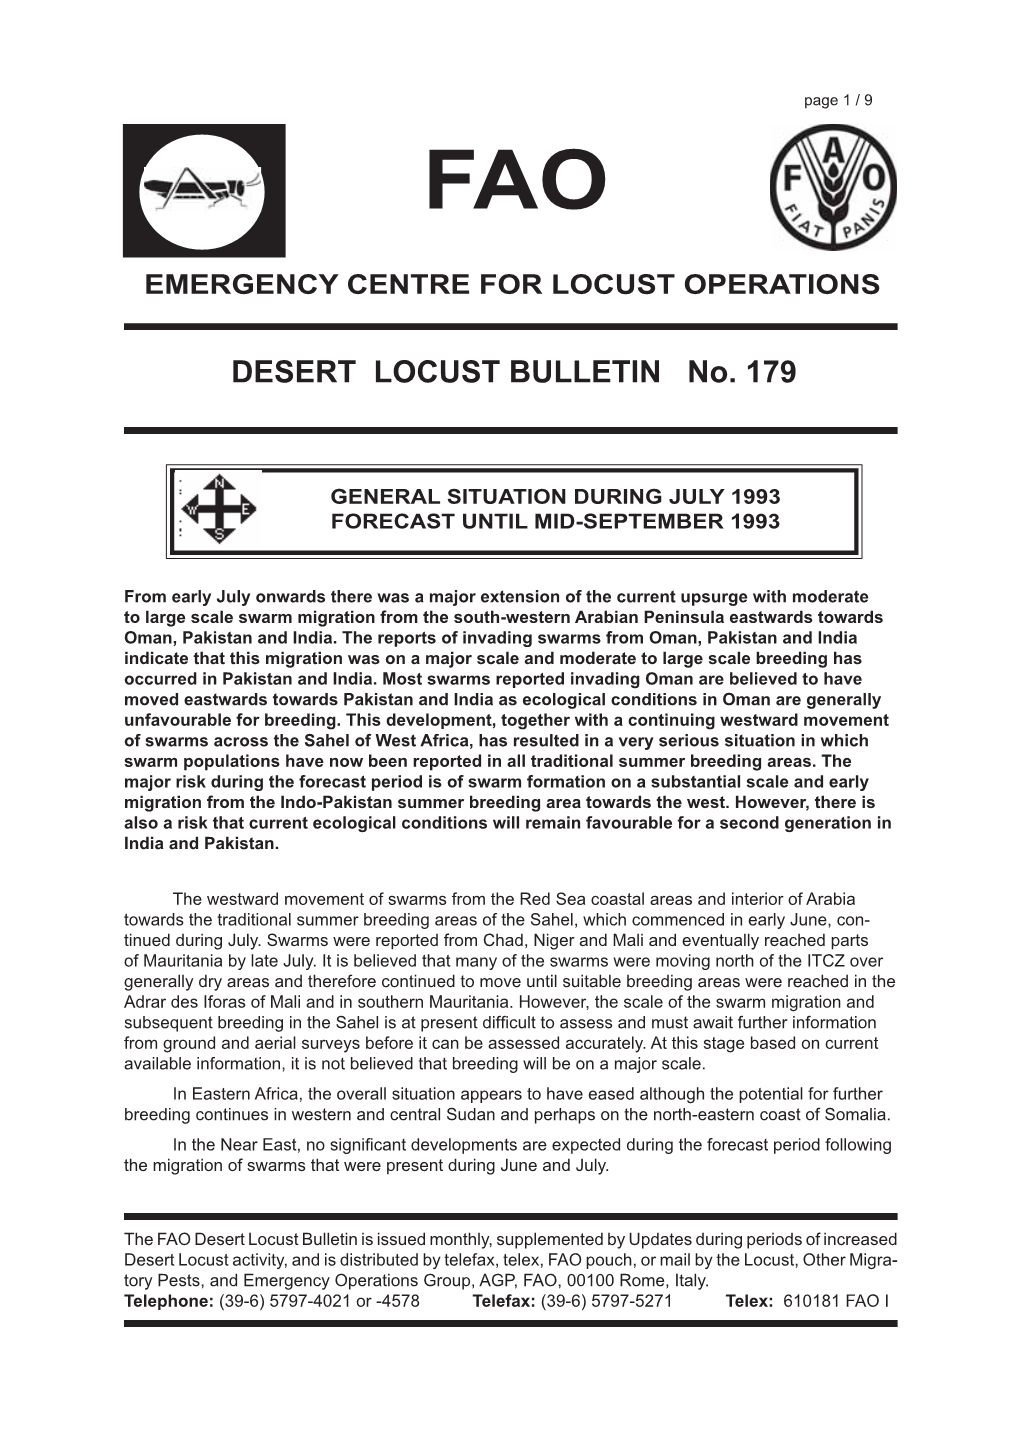 DESERT LOCUST BULLETIN No. 179